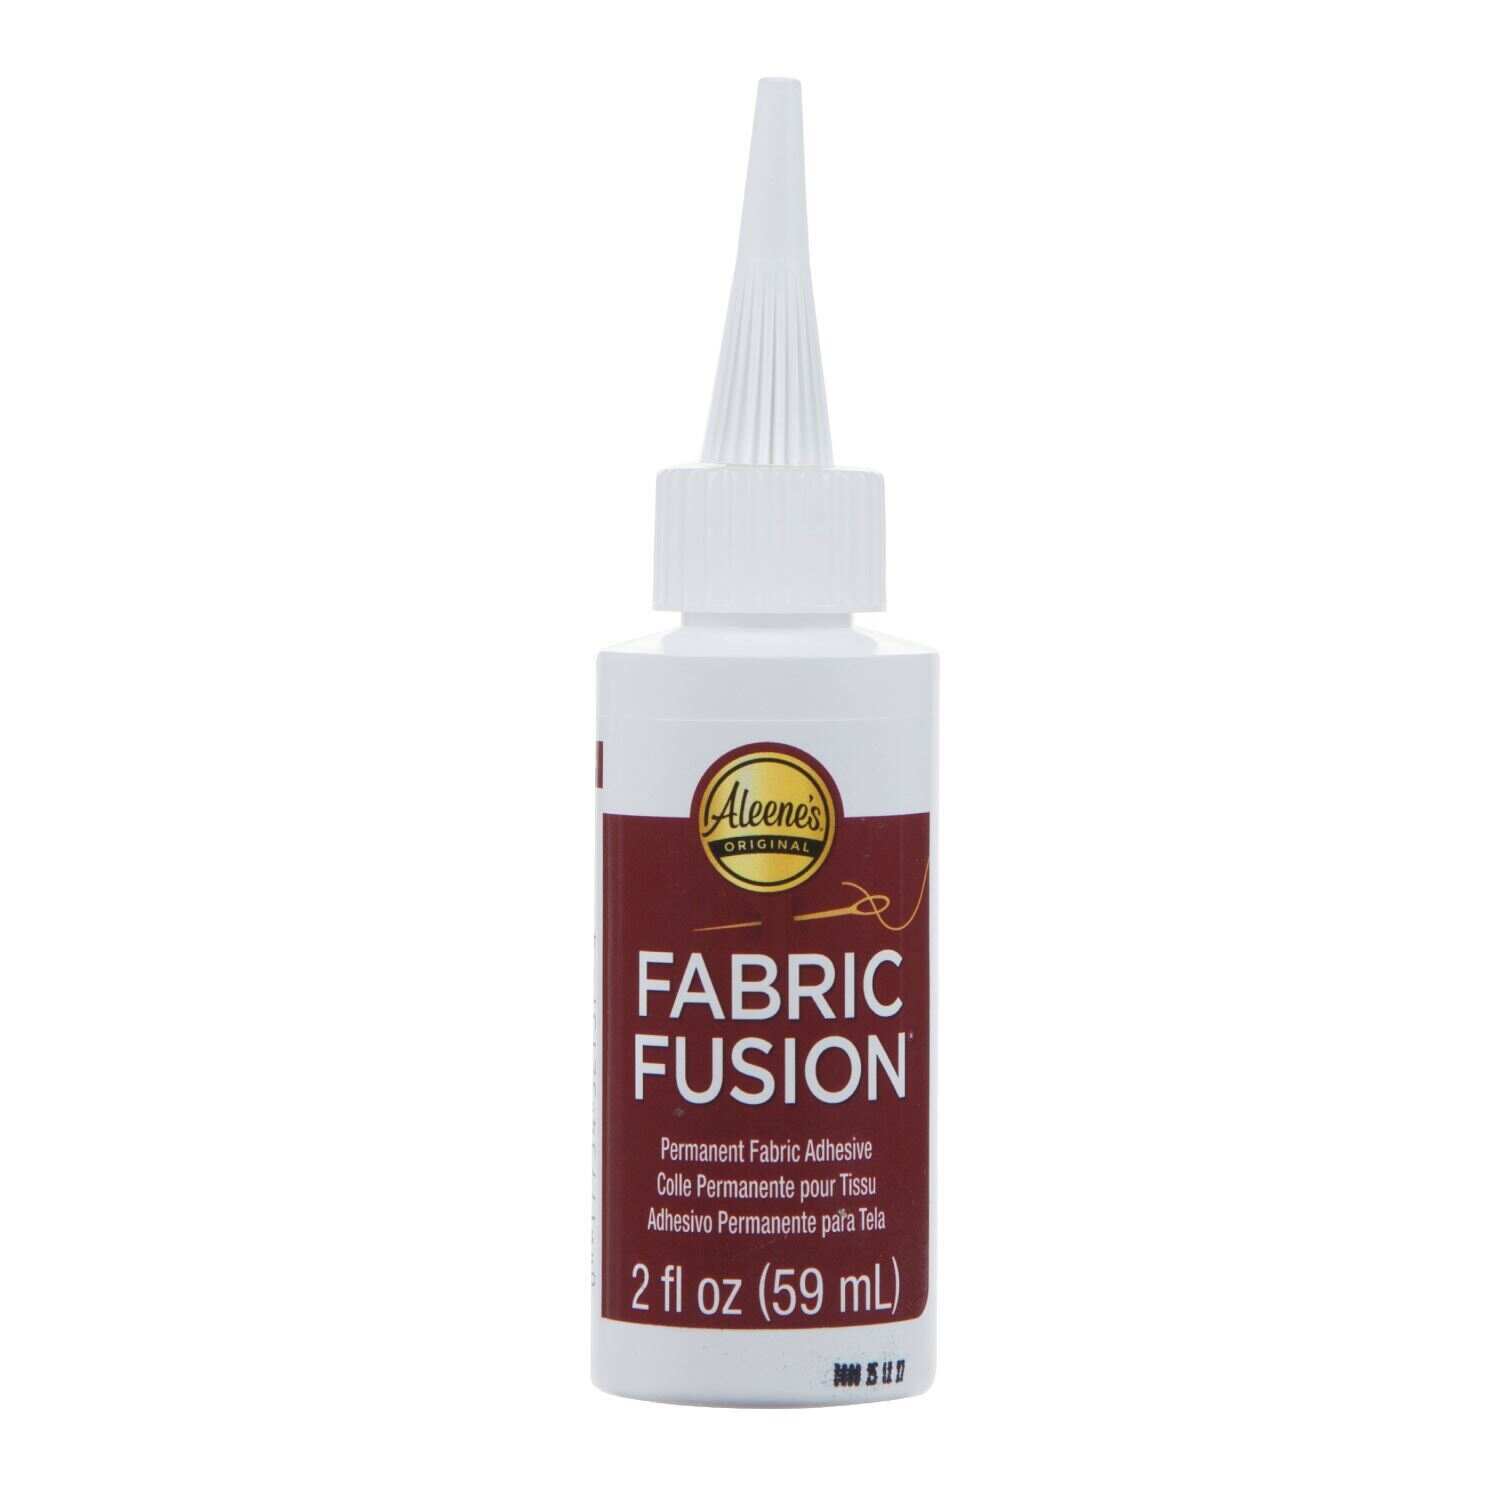 Aleene's Fabric Fusion Permanent Fabric Adhesive 2 fl. oz.